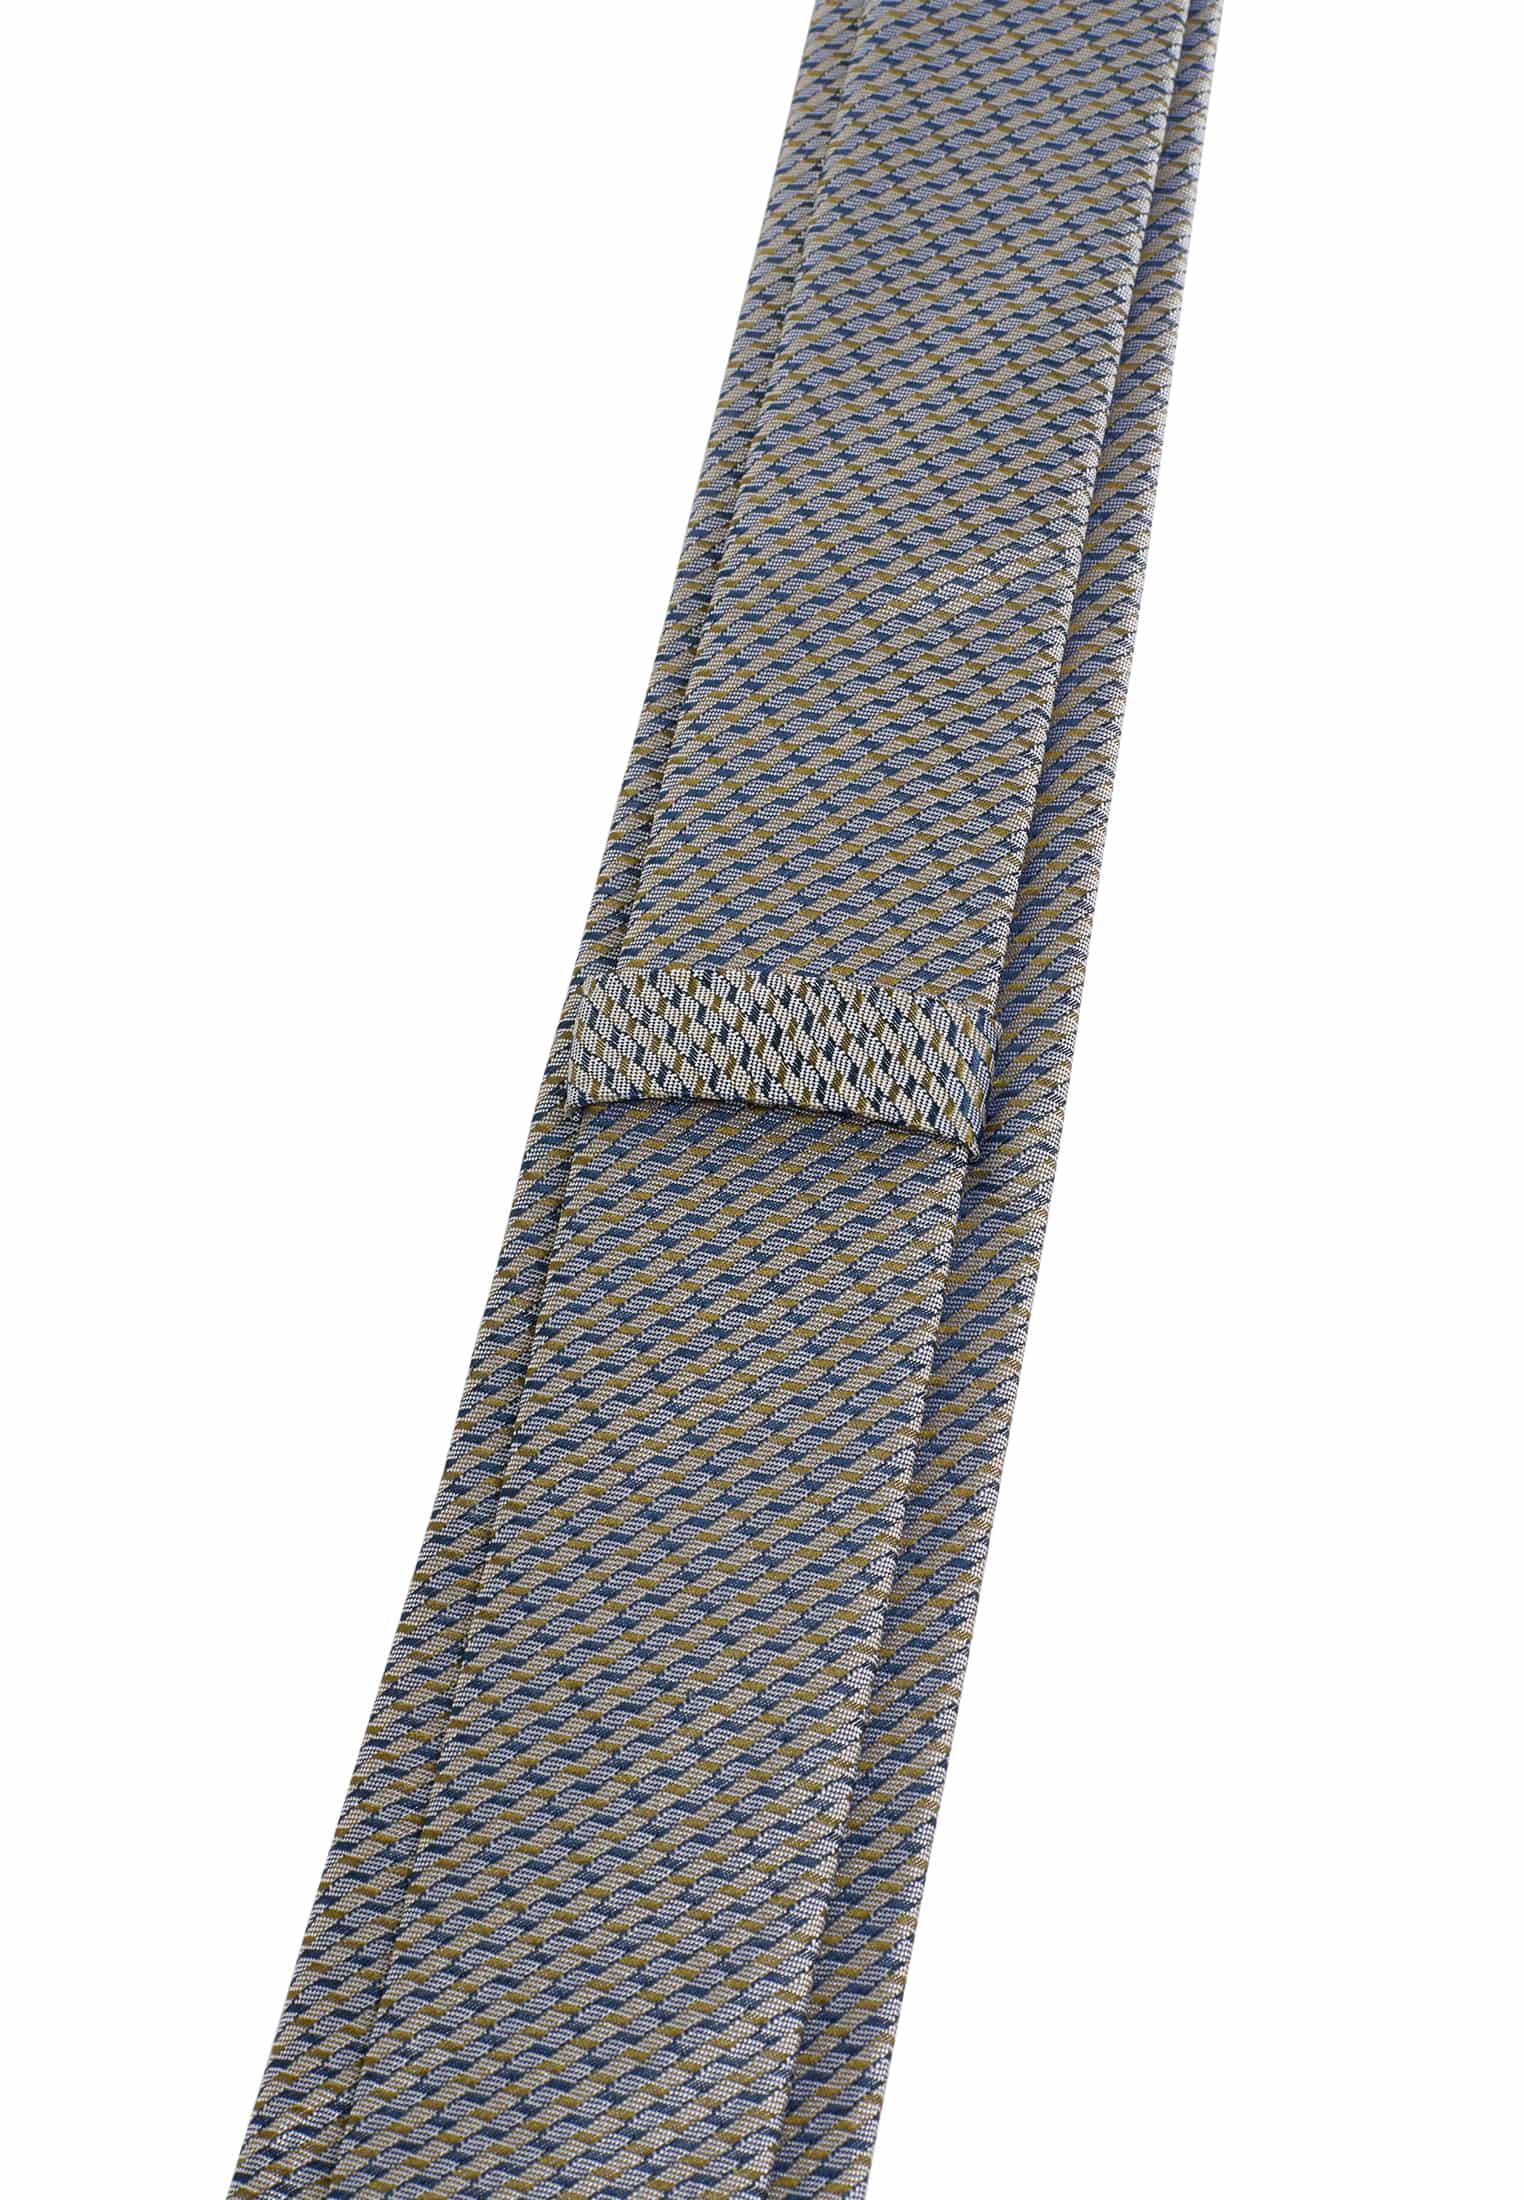 Cravate bleu marine/vert structuré